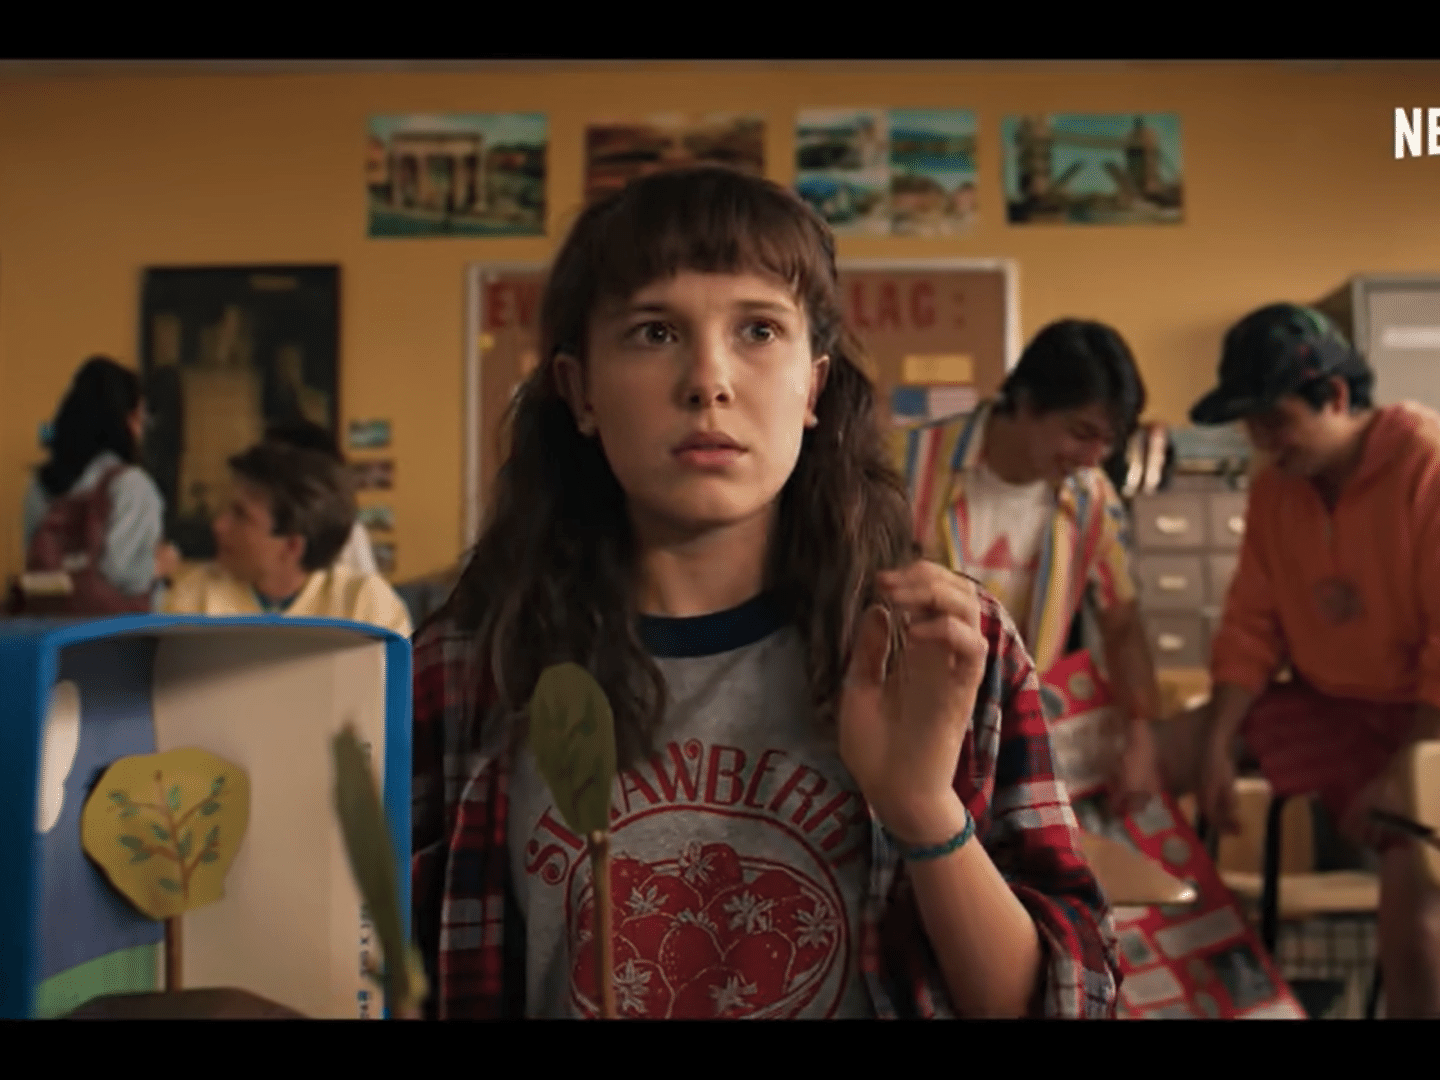 Stranger Things 4ª temporada: Netflix libera os primeiros minutos; confira